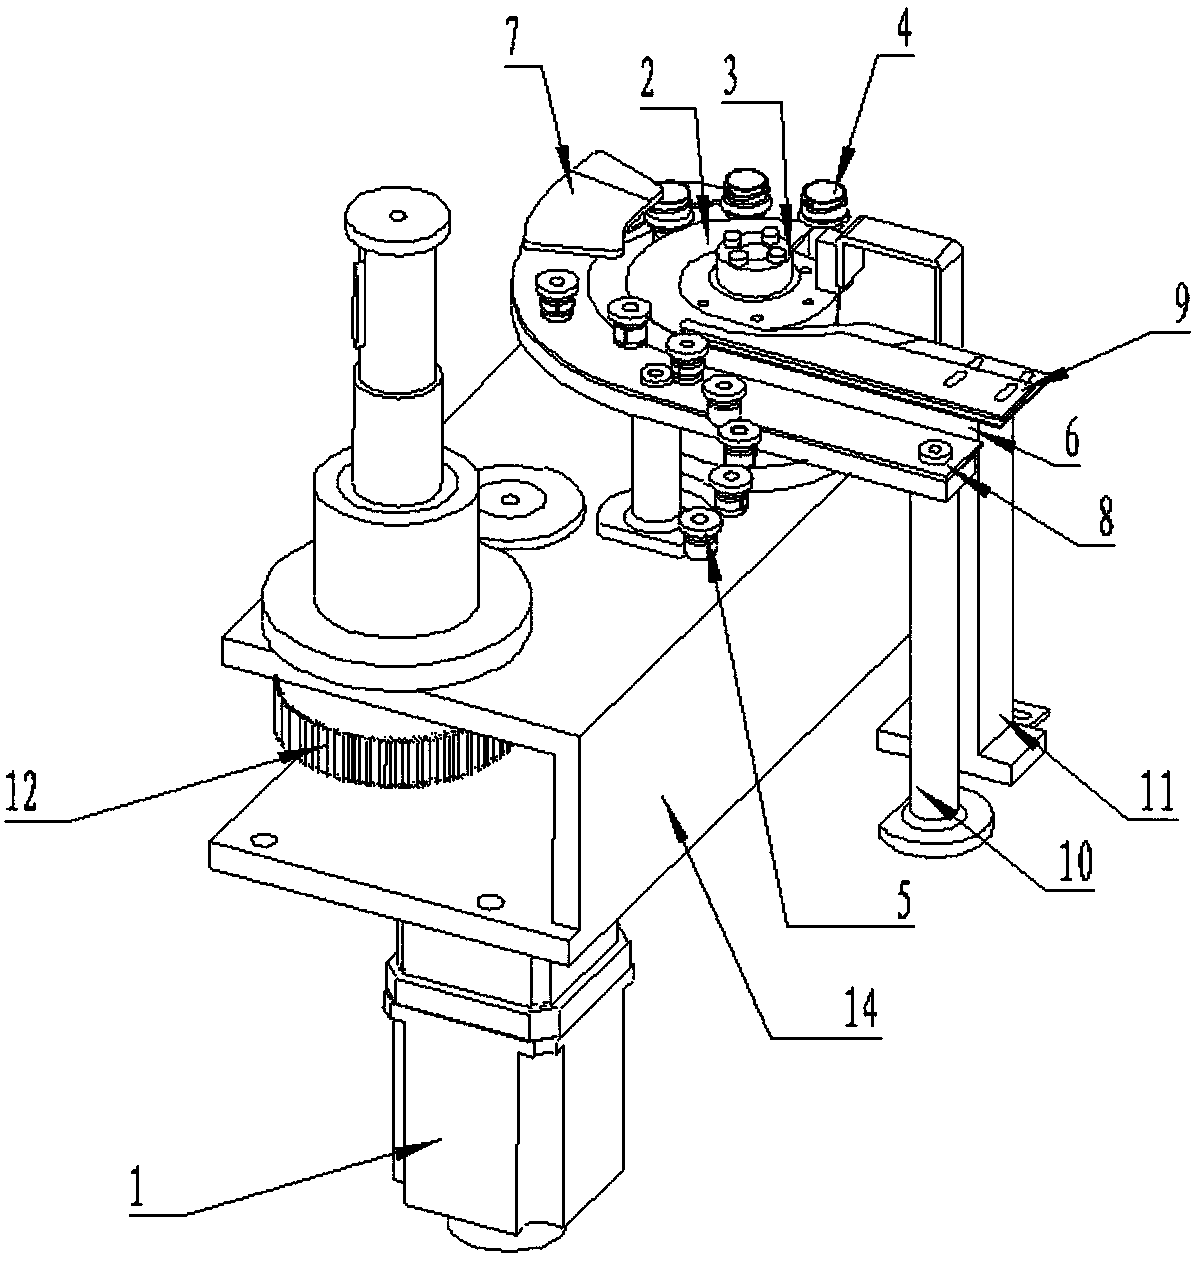 Star wheel structure of bottle blowing machine